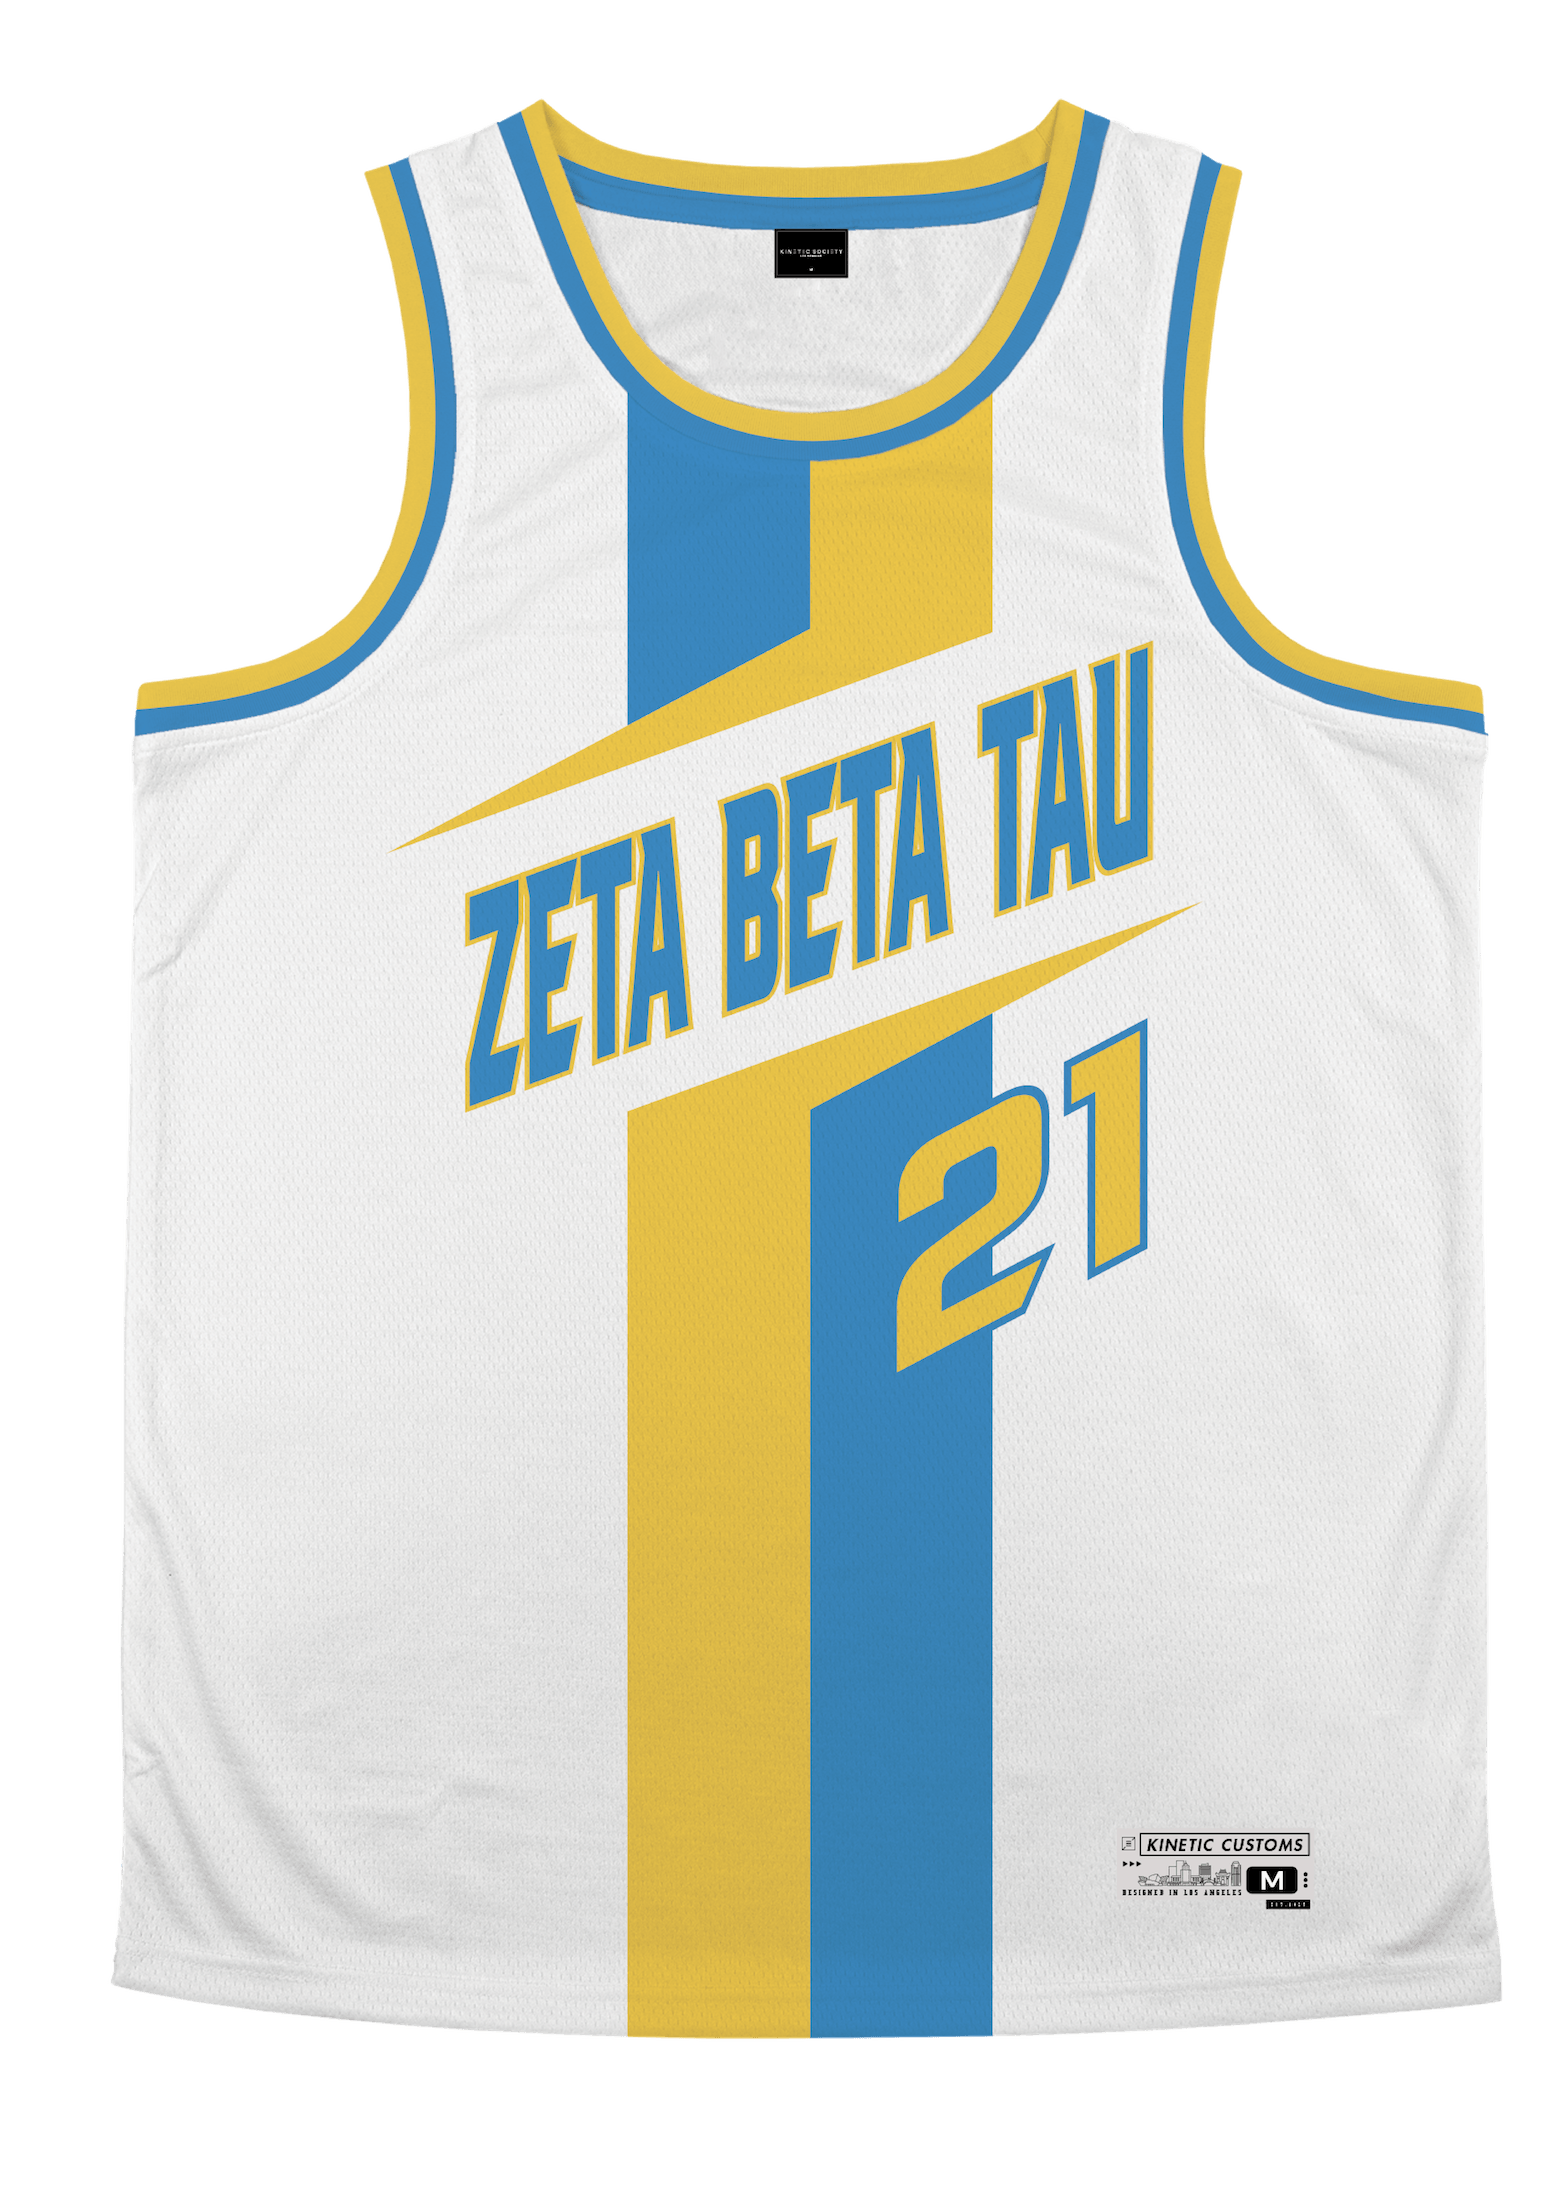 ZETA BETA TAU - Middle Child Basketball Jersey Premium Basketball Kinetic Society LLC 